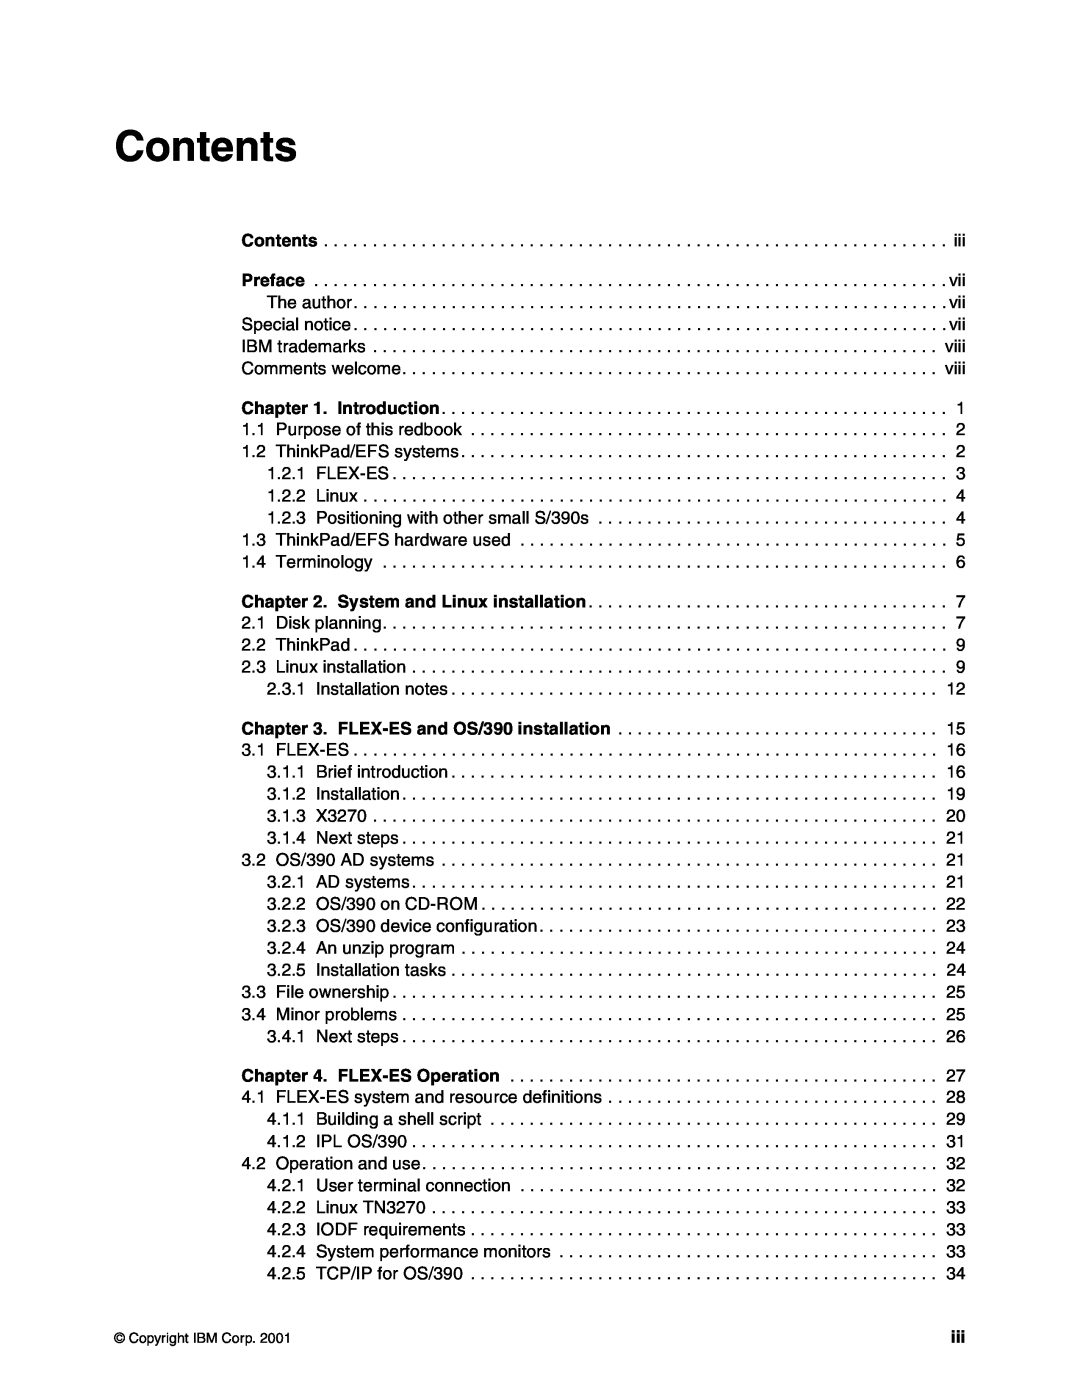 IBM s/390 manual Contents 